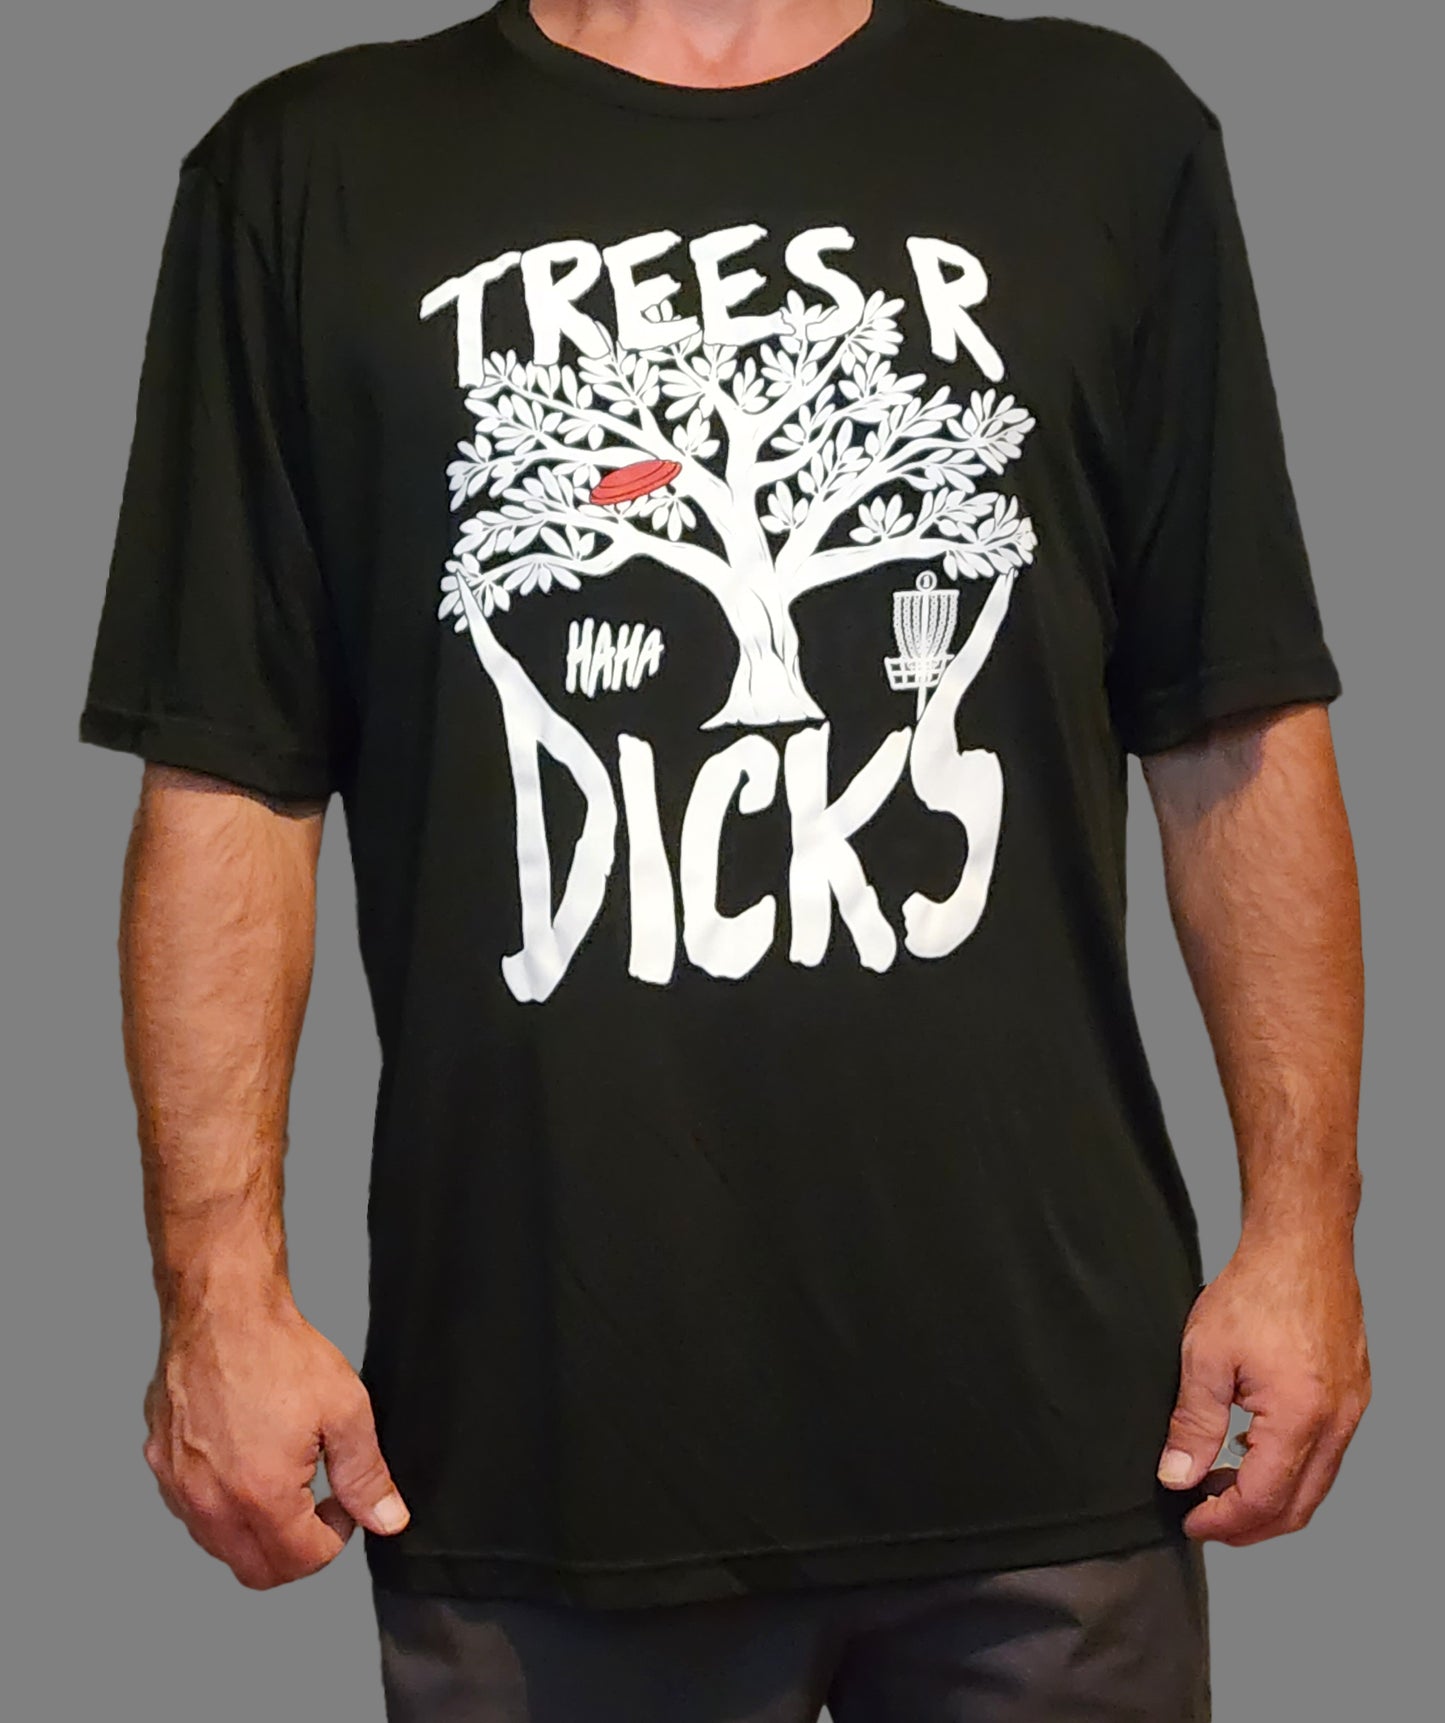 The Original Tree's R Dicks shirt